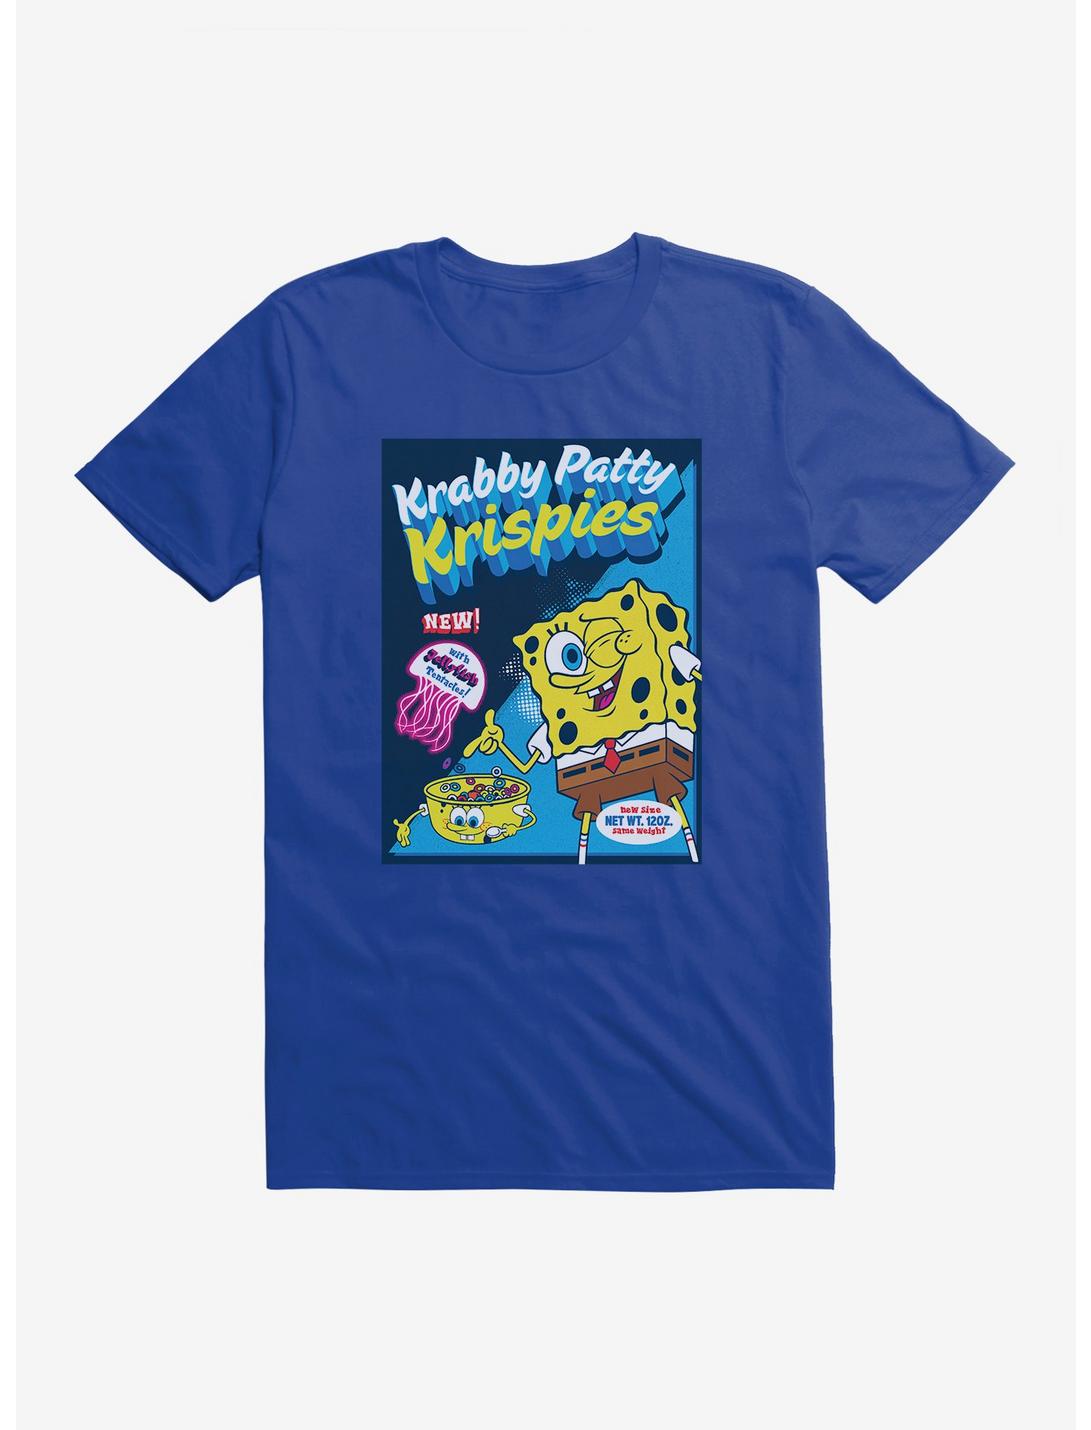 SpongeBob SquarePants Krabby Patty Krispies T-Shirt, ROYAL BLUE, hi-res